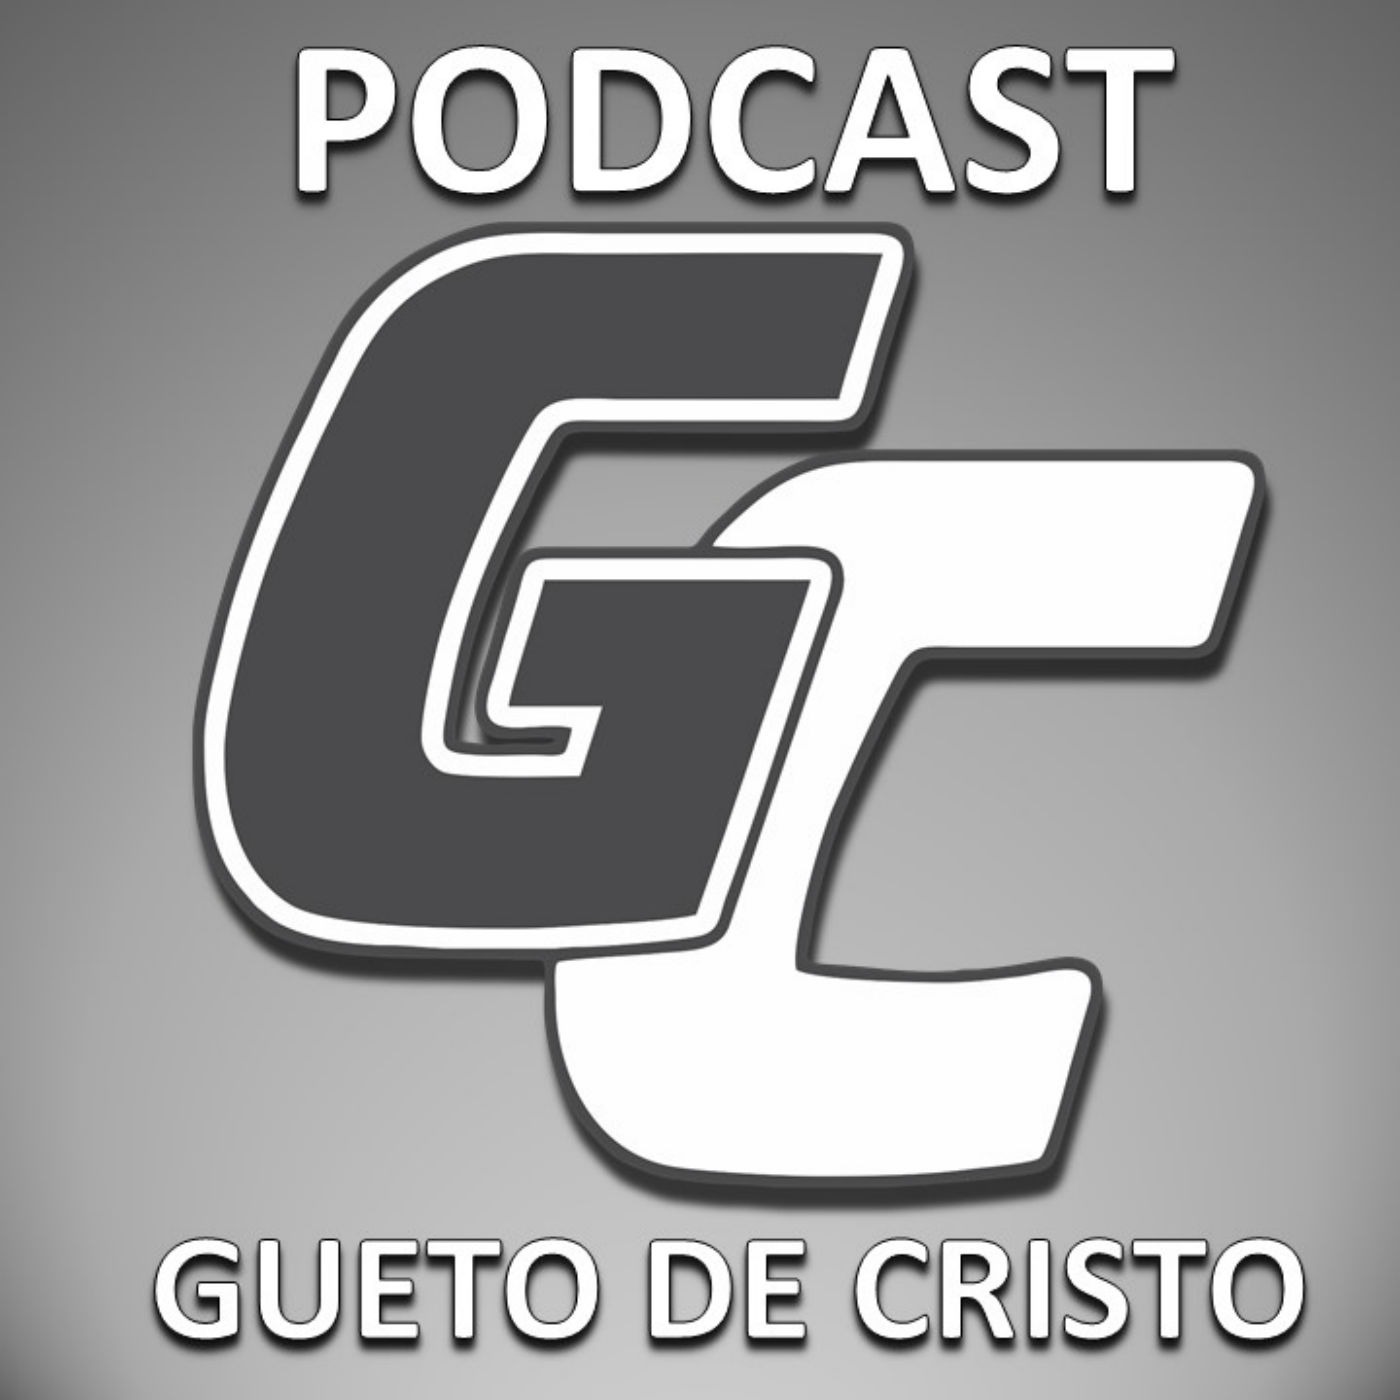 CGCAST Podcast